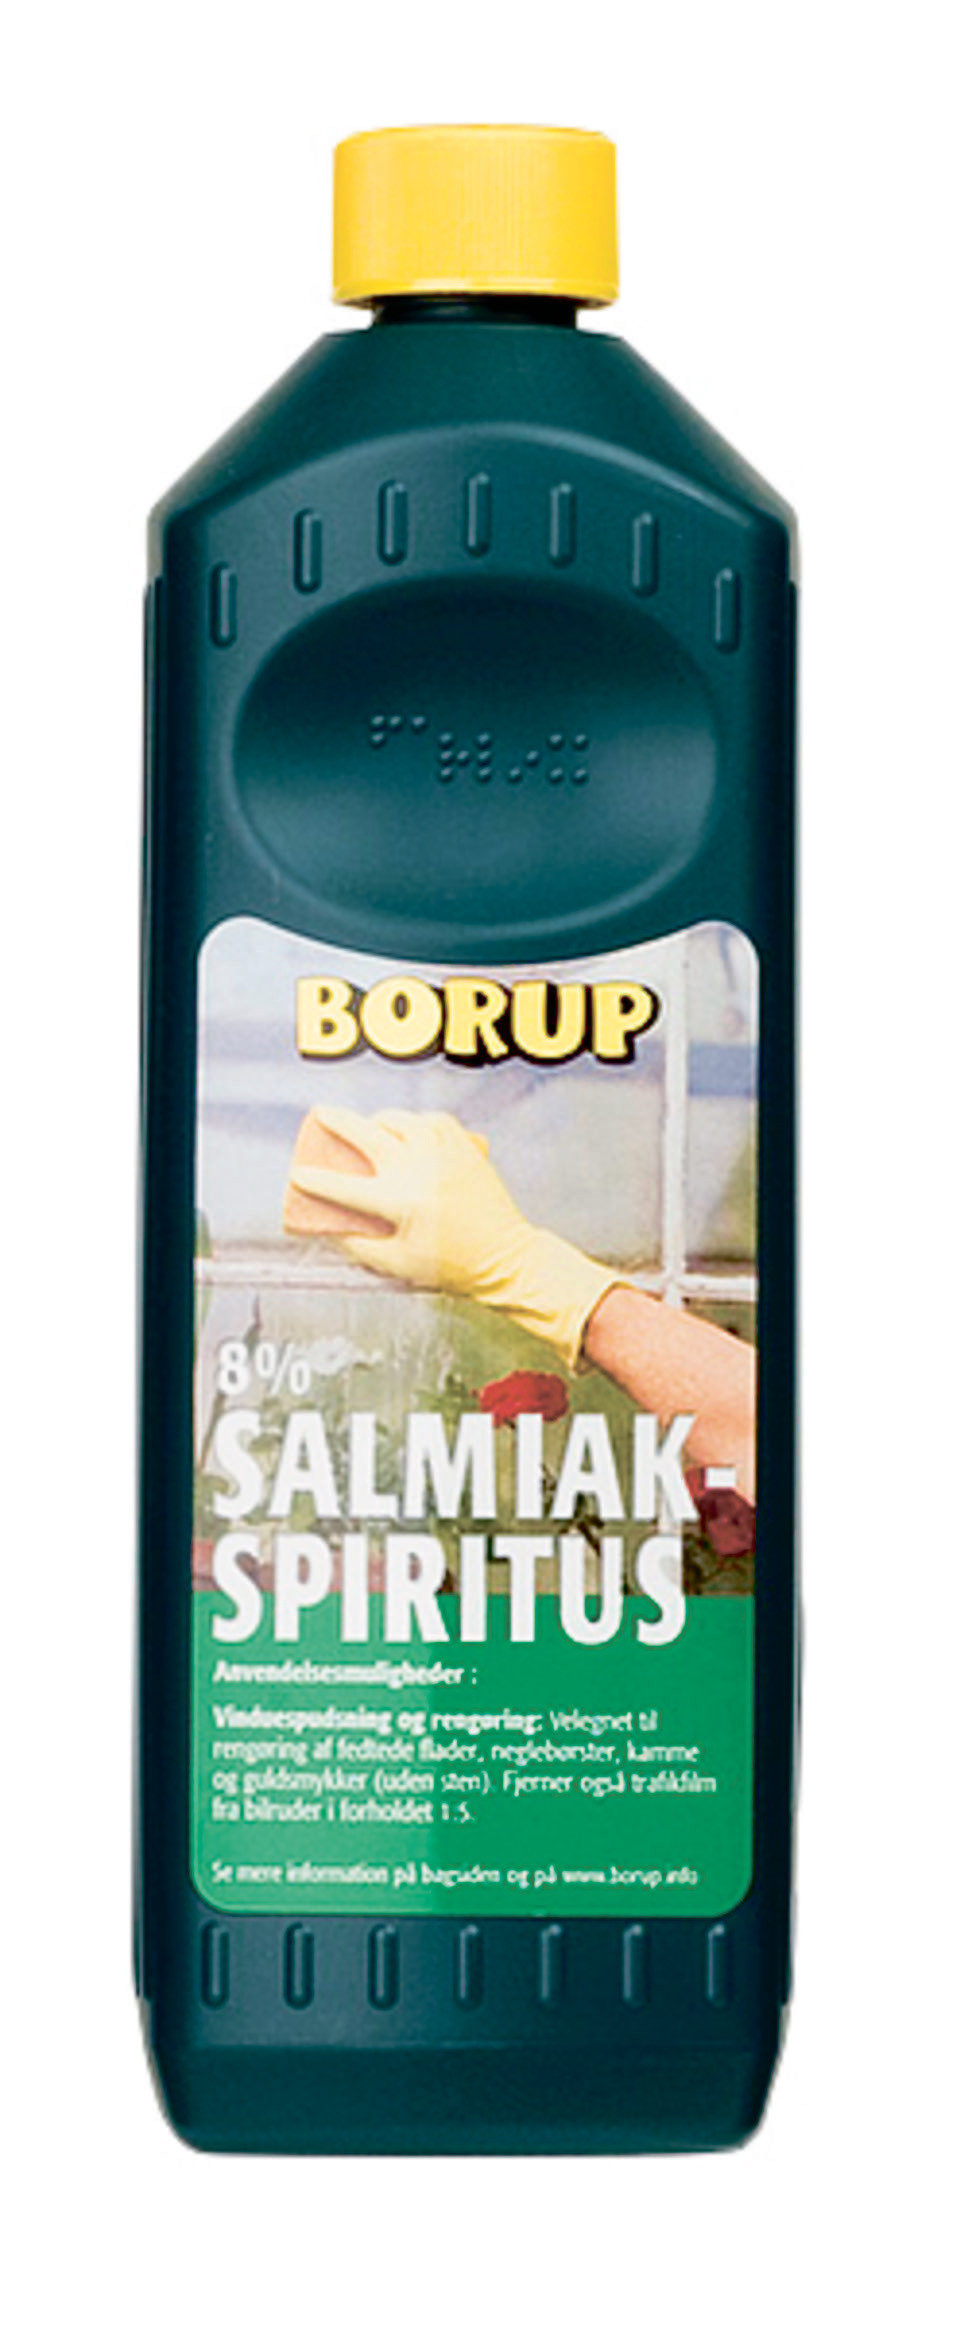 #3 - Borup Salmiakspiritus 8% 500 ml